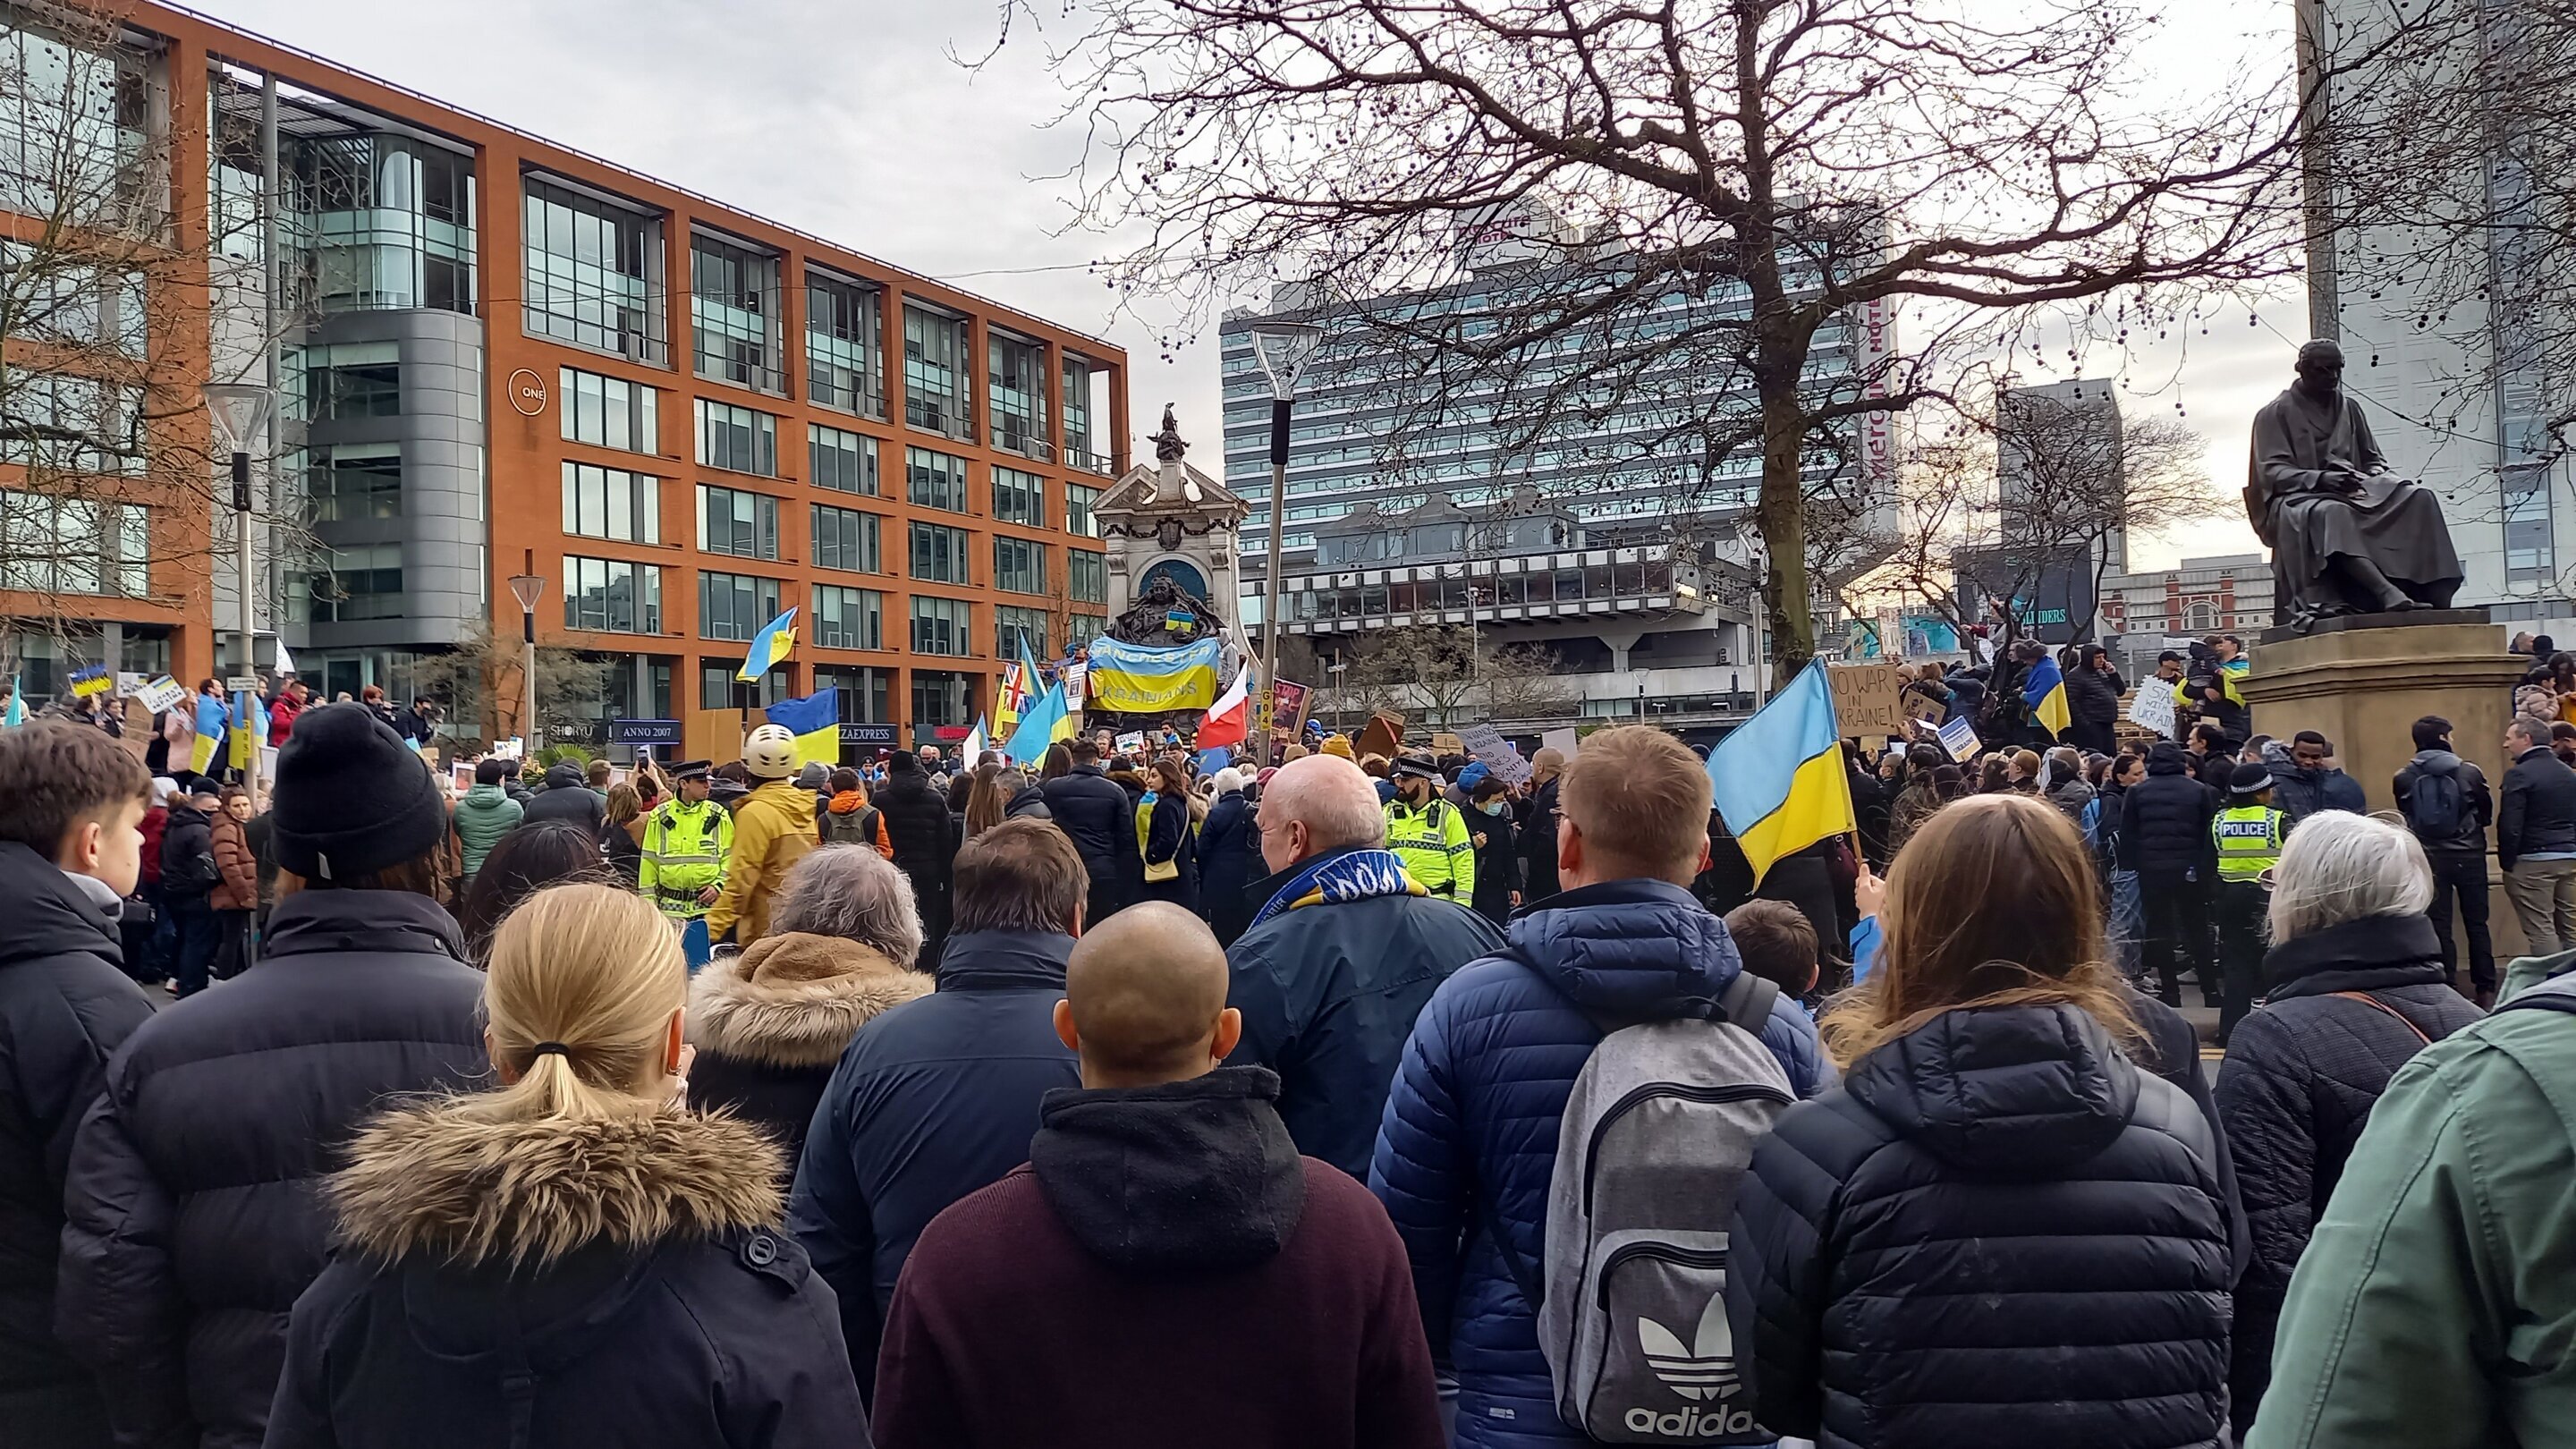 02_220227_Manchester_Ukrania_demonstration